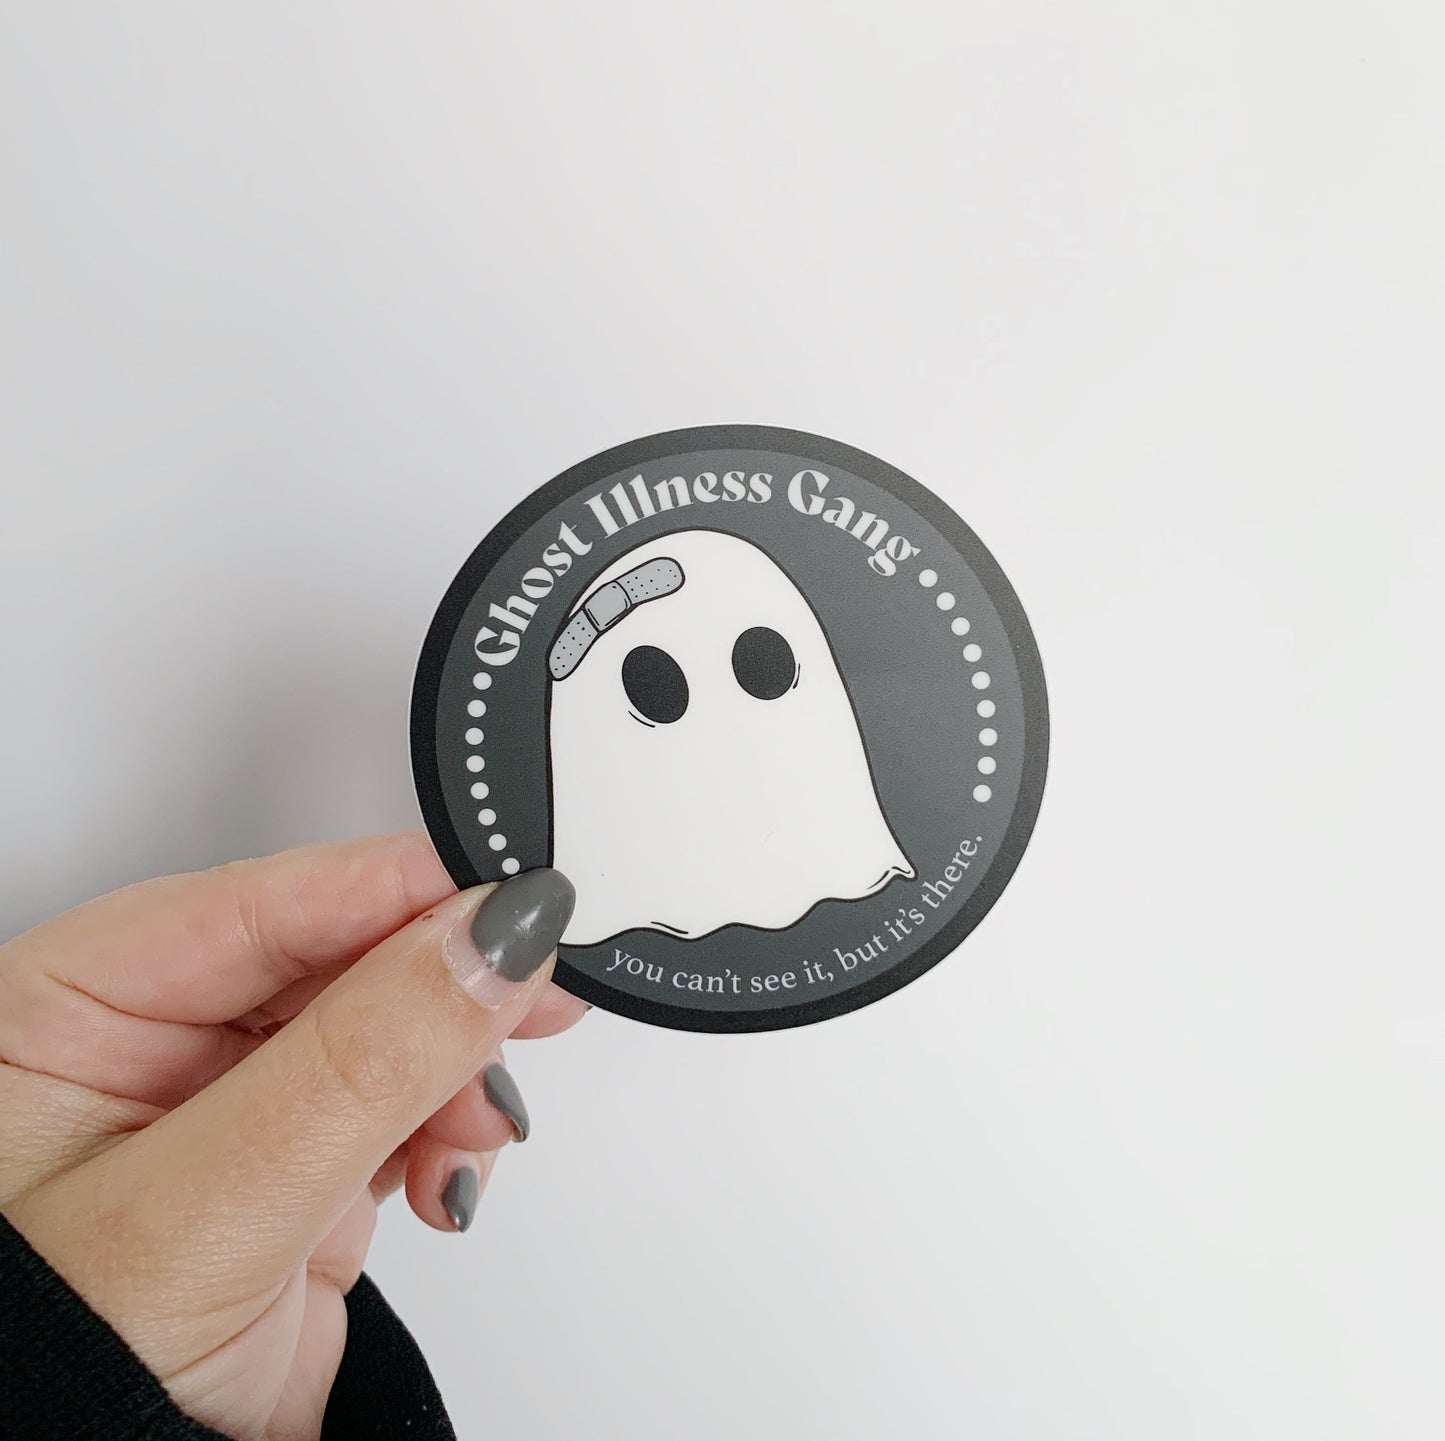 Ghost Illness Gang Sticker